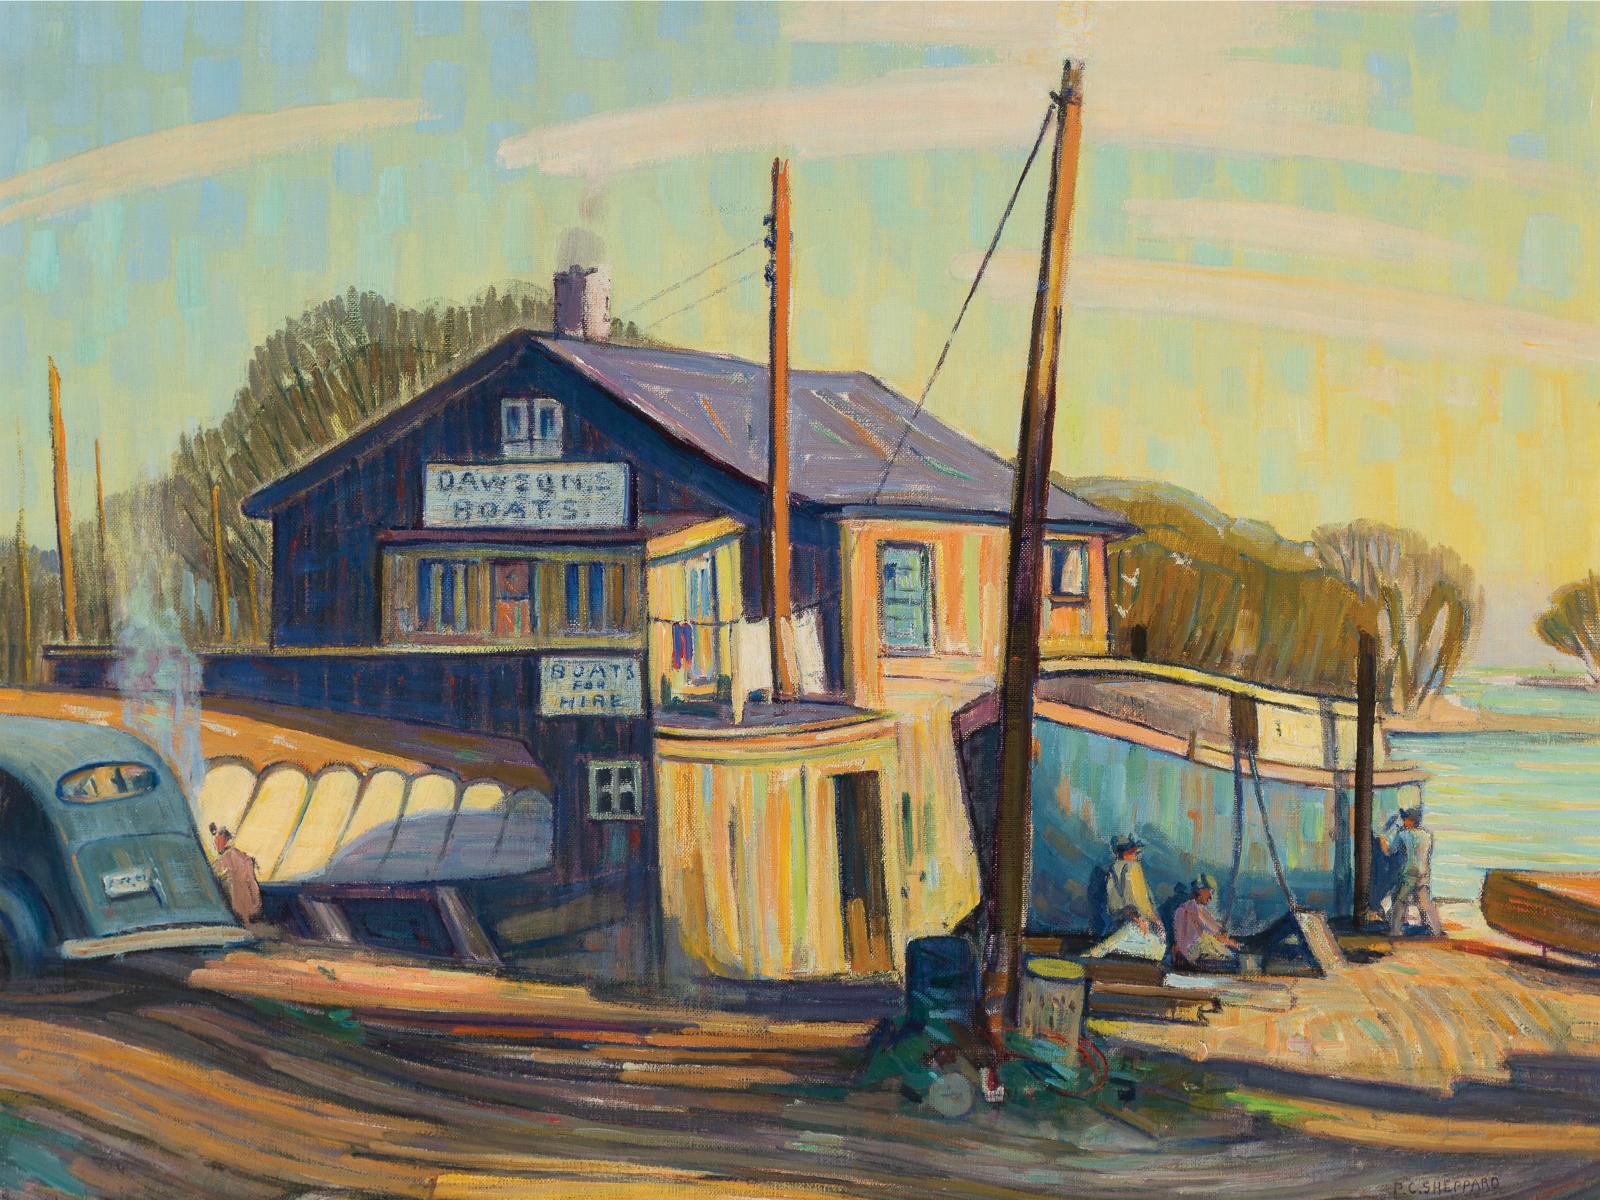 Peter Clapham (P.C.) Sheppard (1882-1965) - Dawson's Boats, C.1939